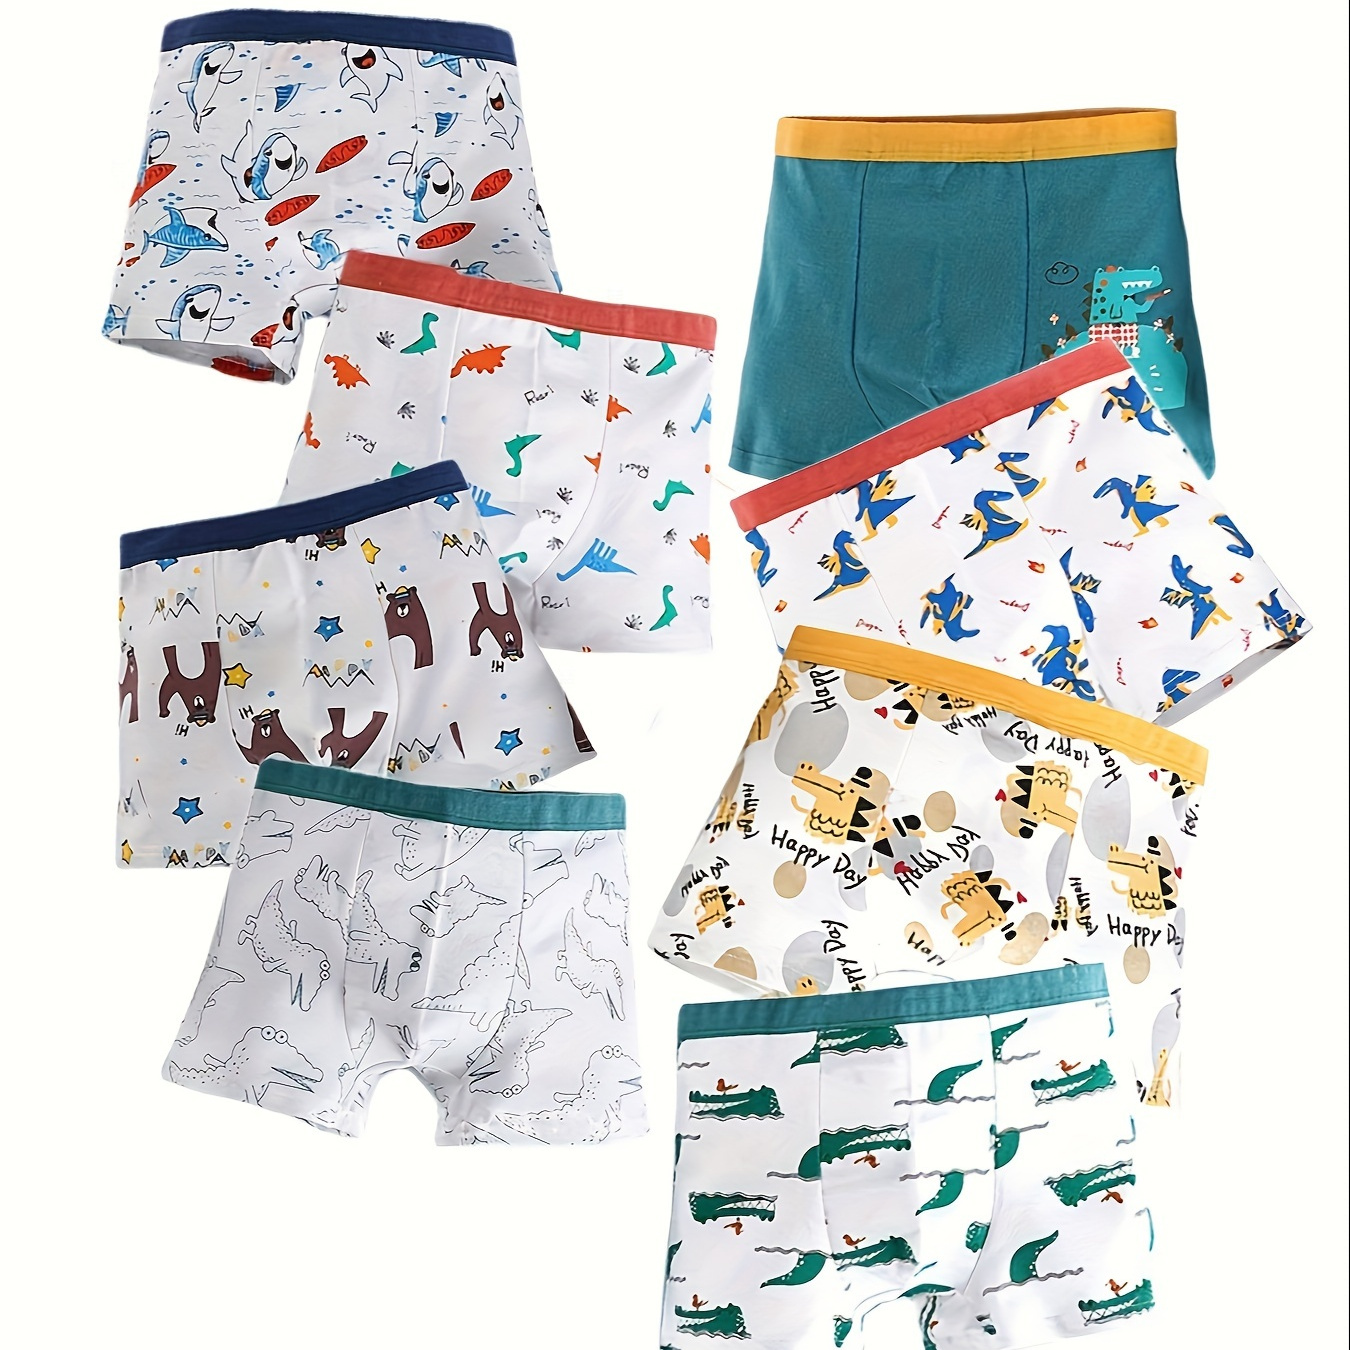 

8pcs Boys Comfortable Cotton Boxer Briefs Set, Cute Cartoon Pattern Stretchy Shorts Set, Soft Breathable Kids Sports Underwear Underpants Clothes